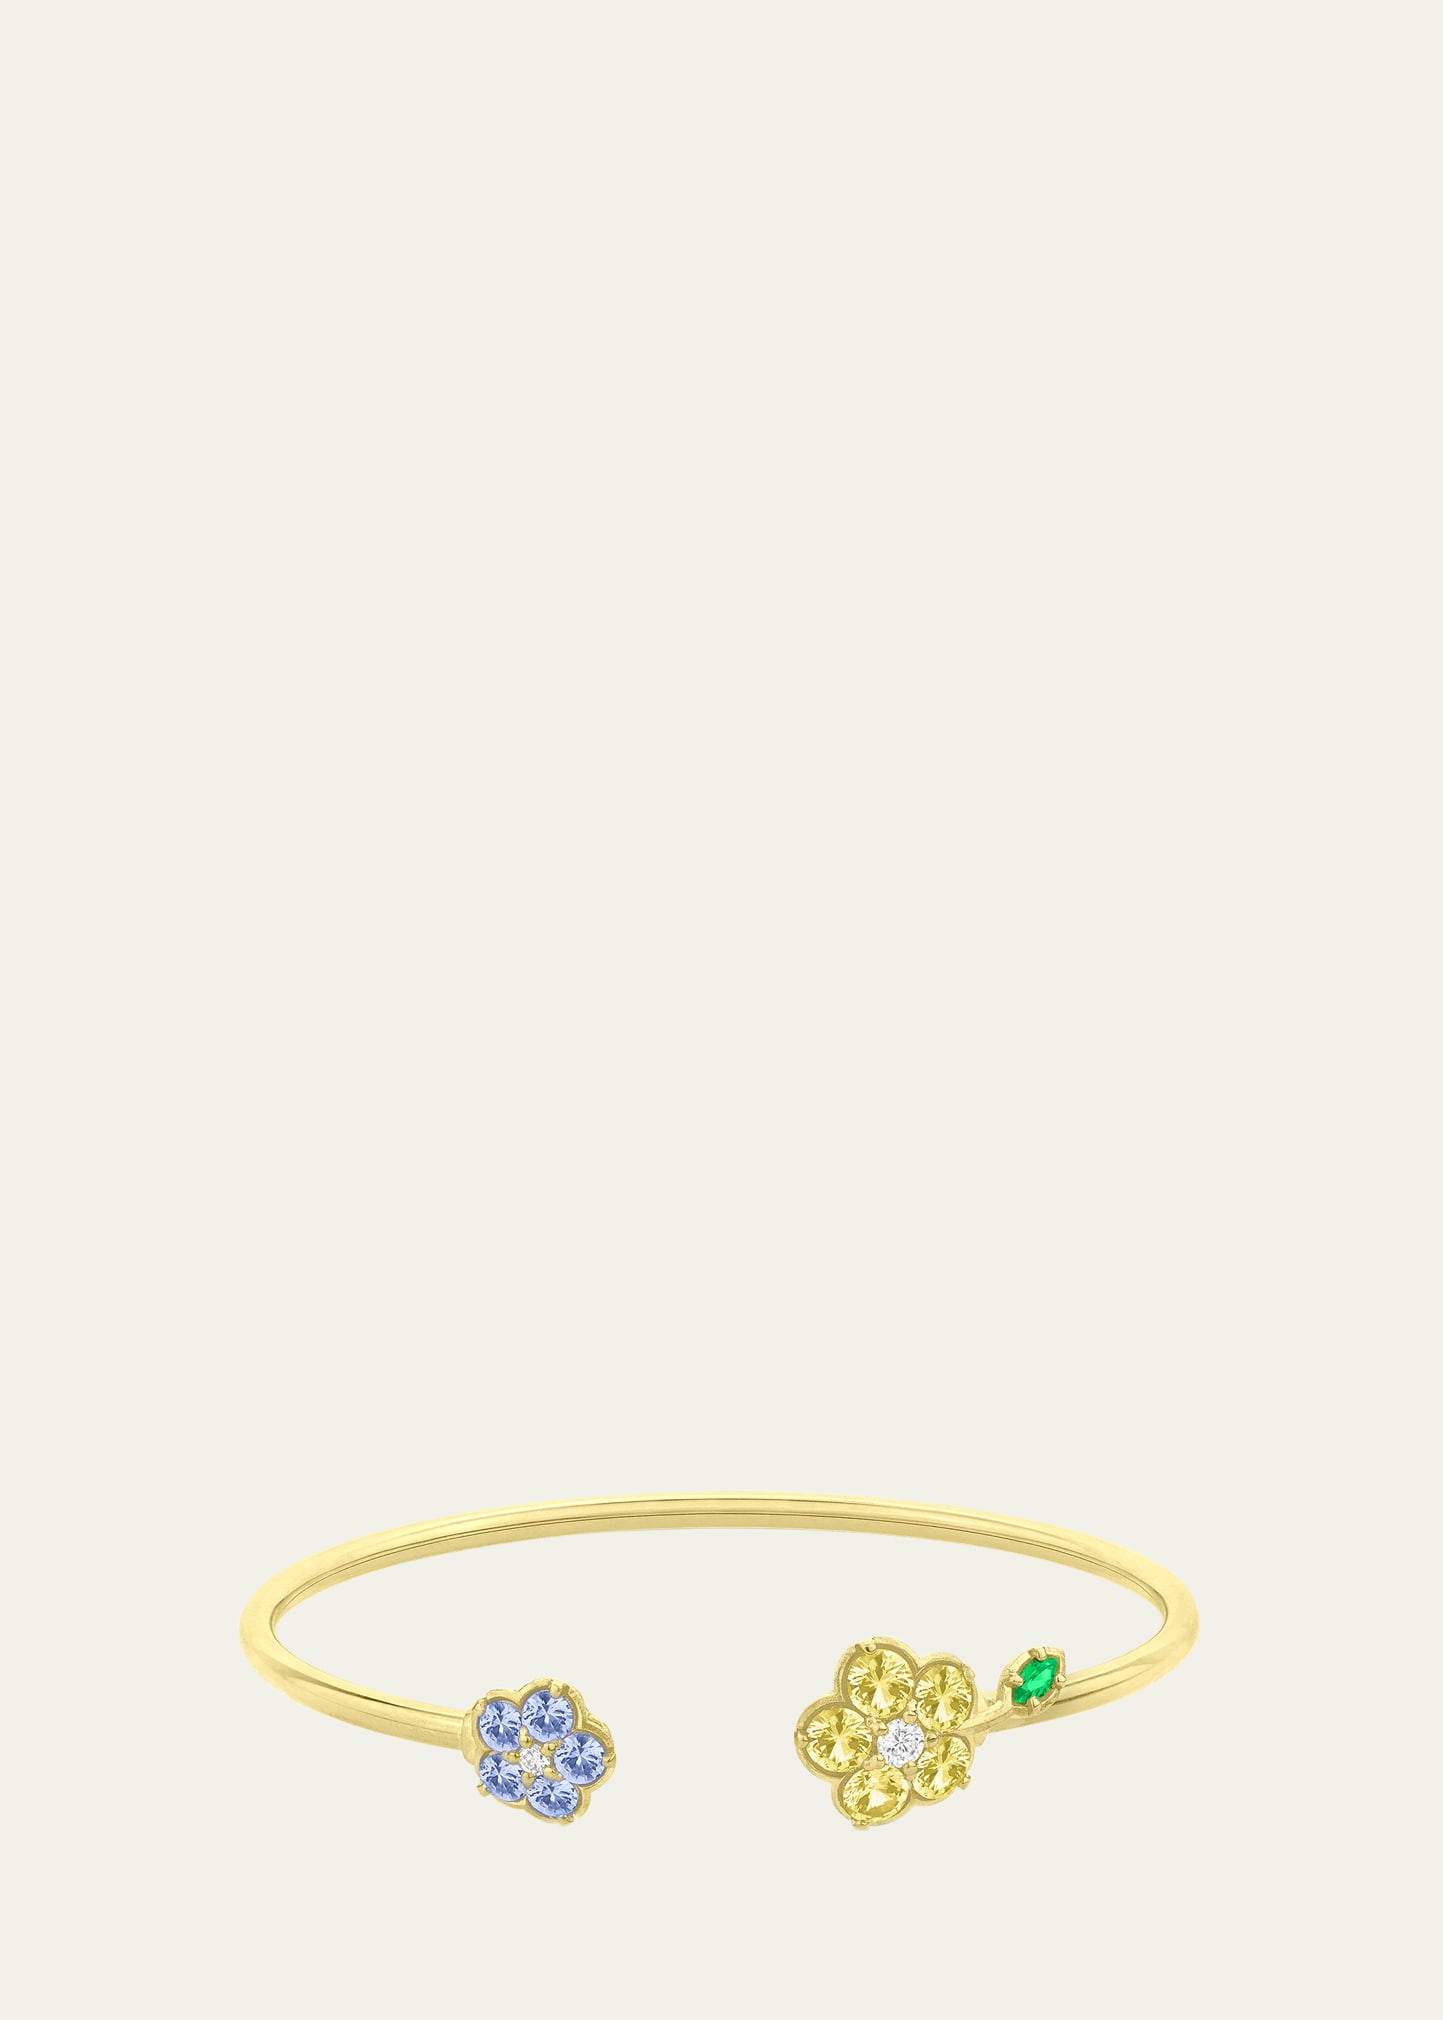 Paul Morelli Yellow Gold Wild Child Tube Bracelet With Diamonds, Sapphires And Tsavorite